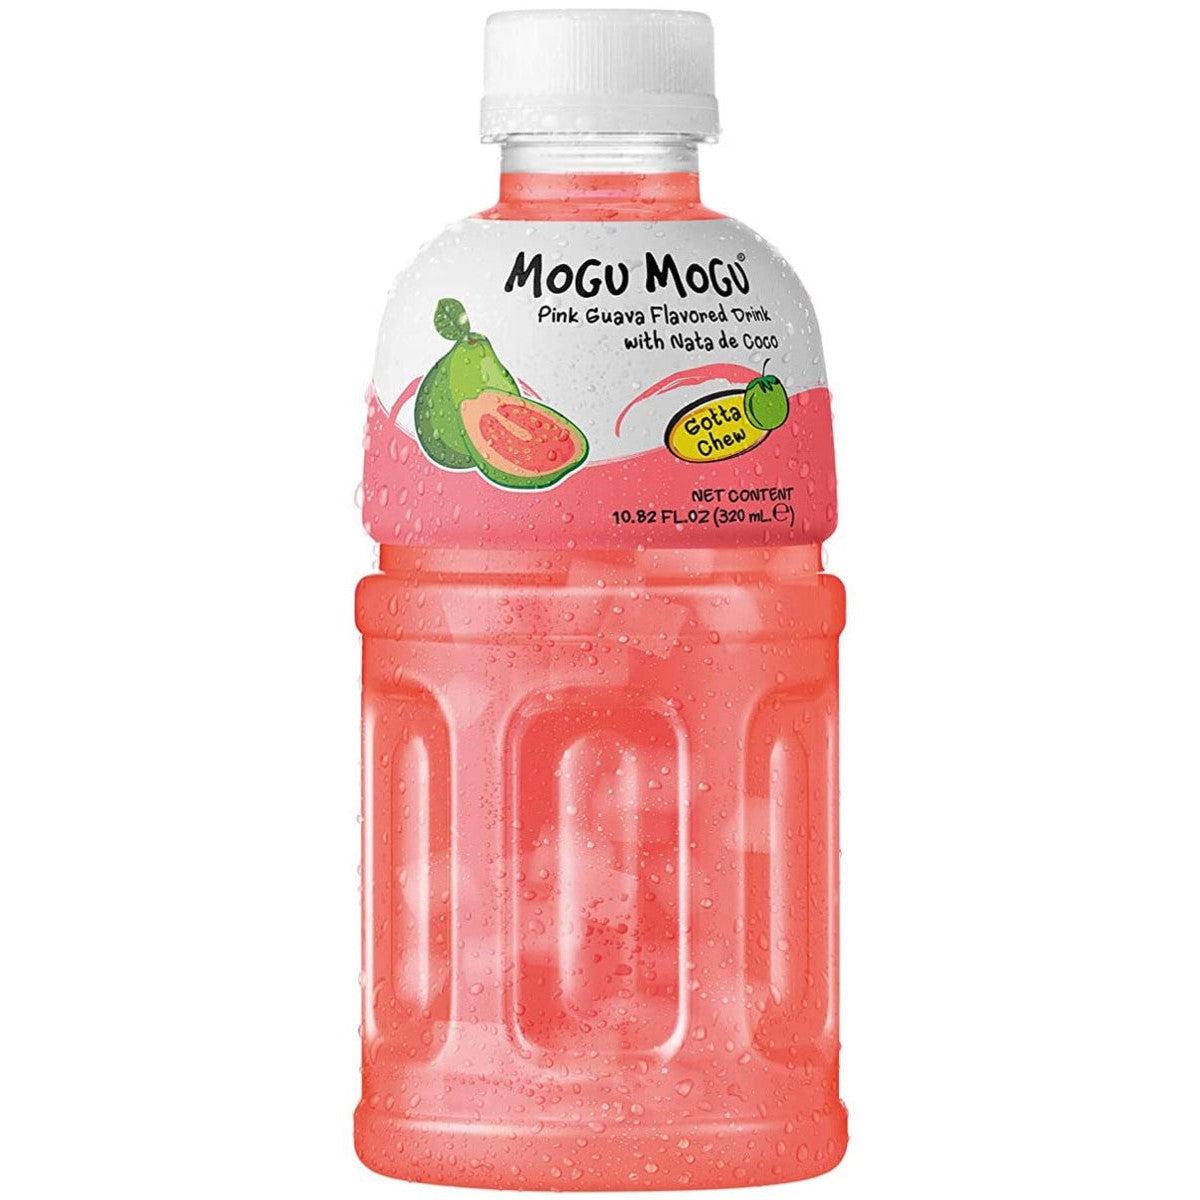 Mogu Mogu Nata De Coco Pink Guava 320ml - Candy Mail UK